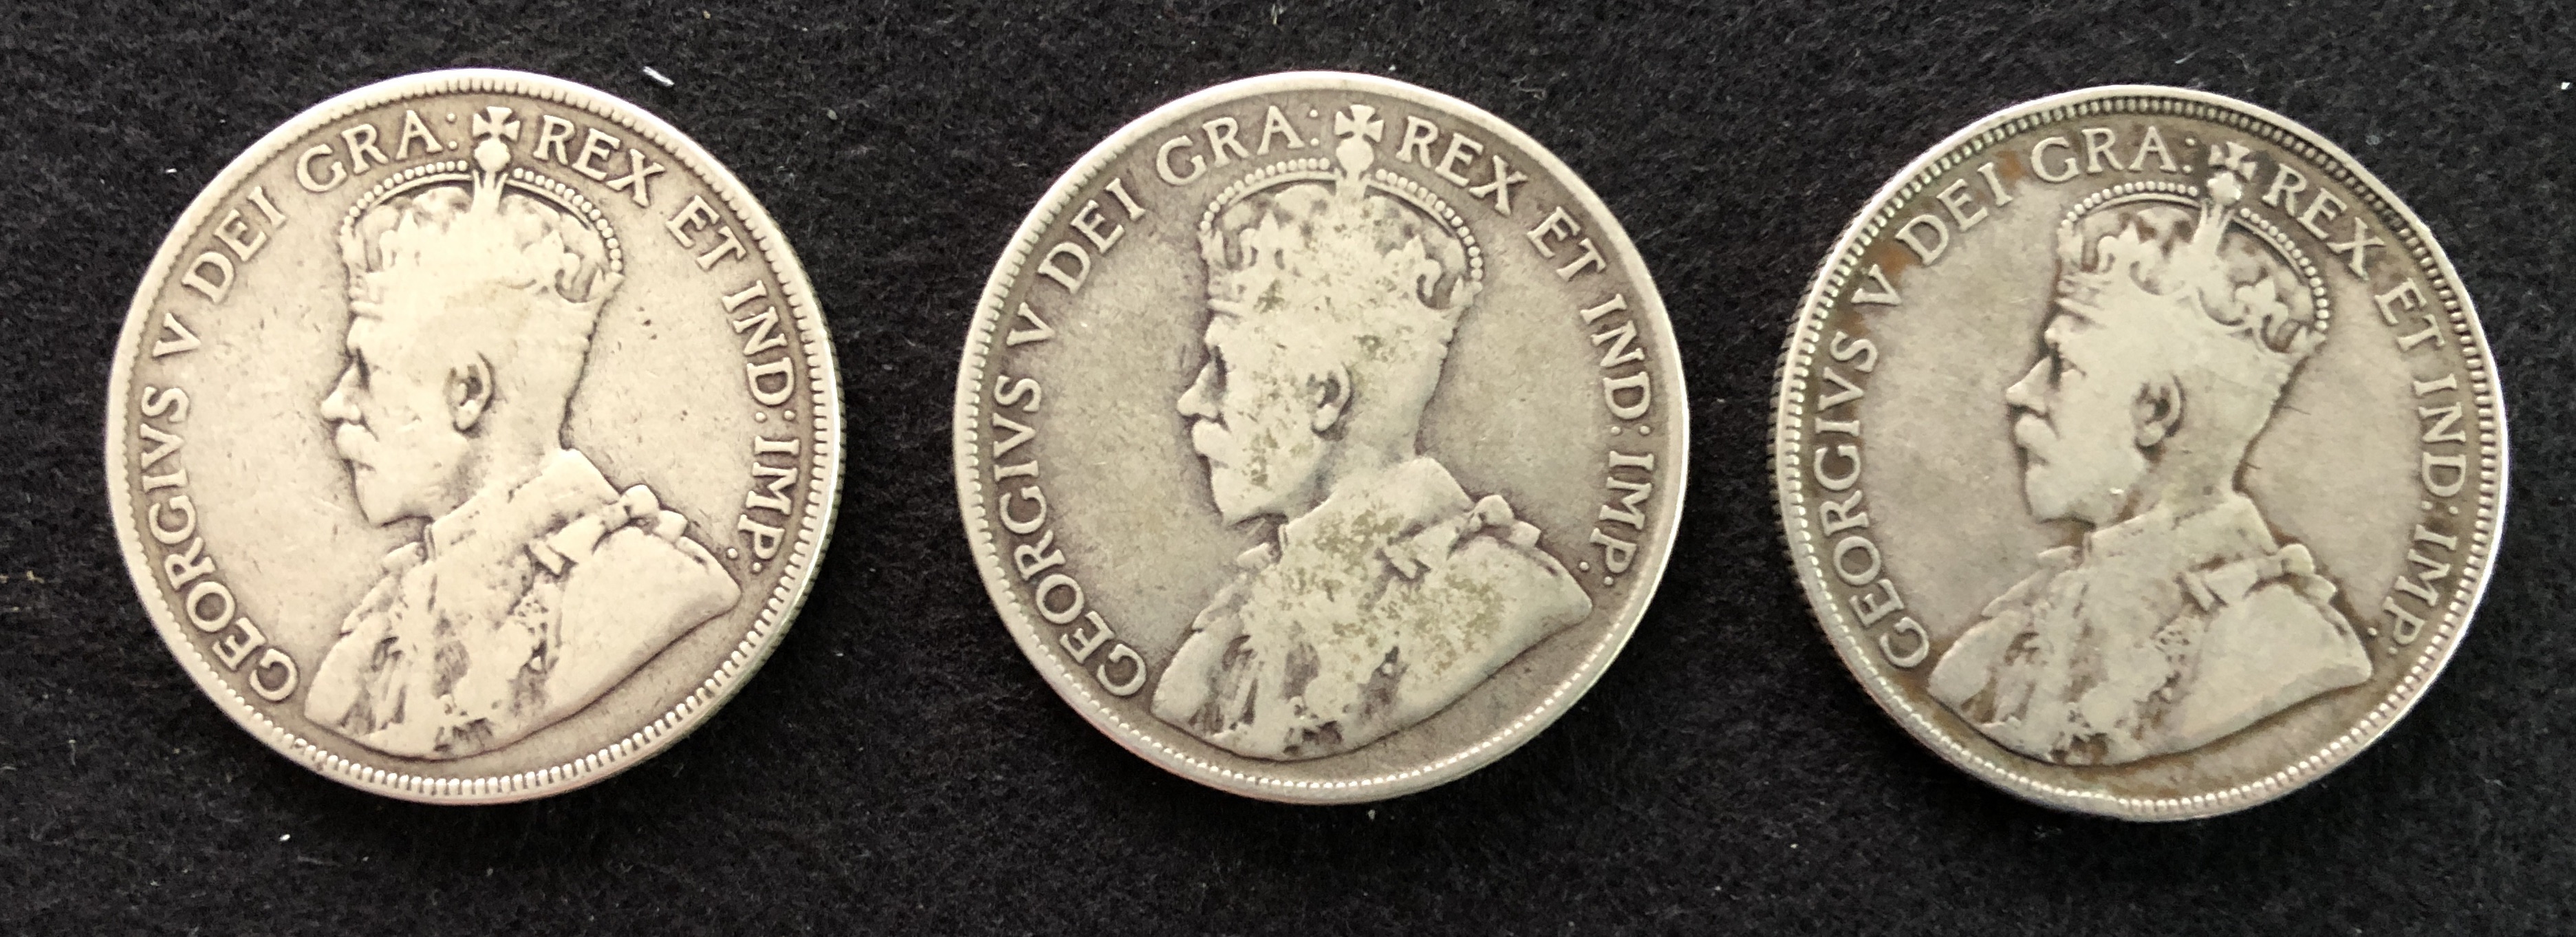 50 cents - 1919-1929 back.JPG